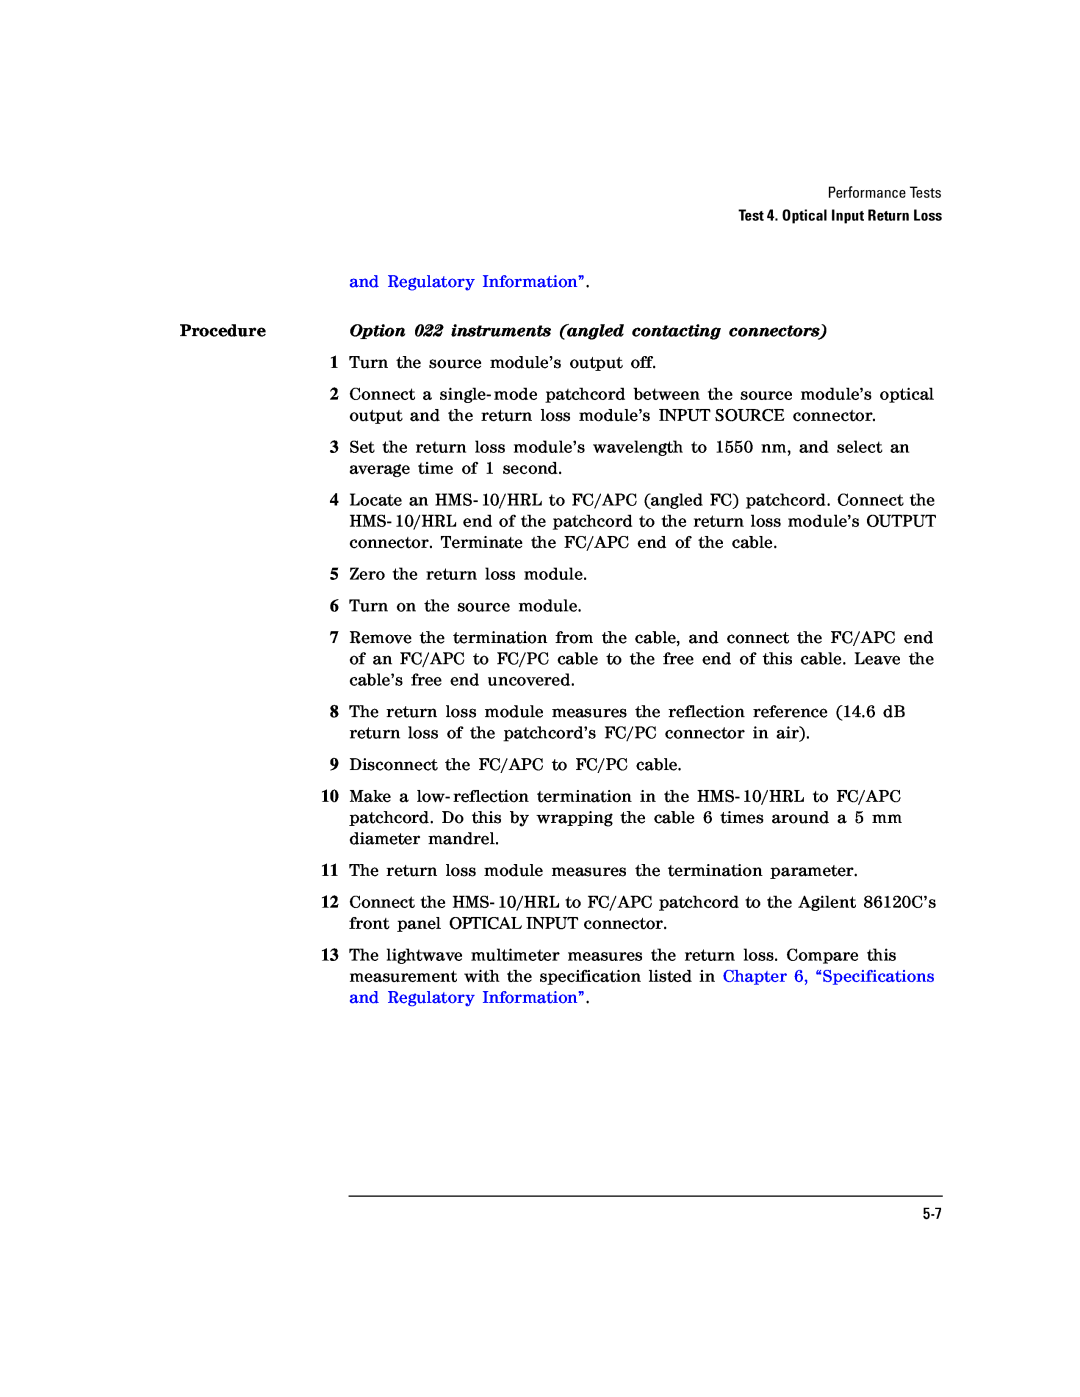 Agilent Technologies Agilent 86120C manual and Regulatory Information” 